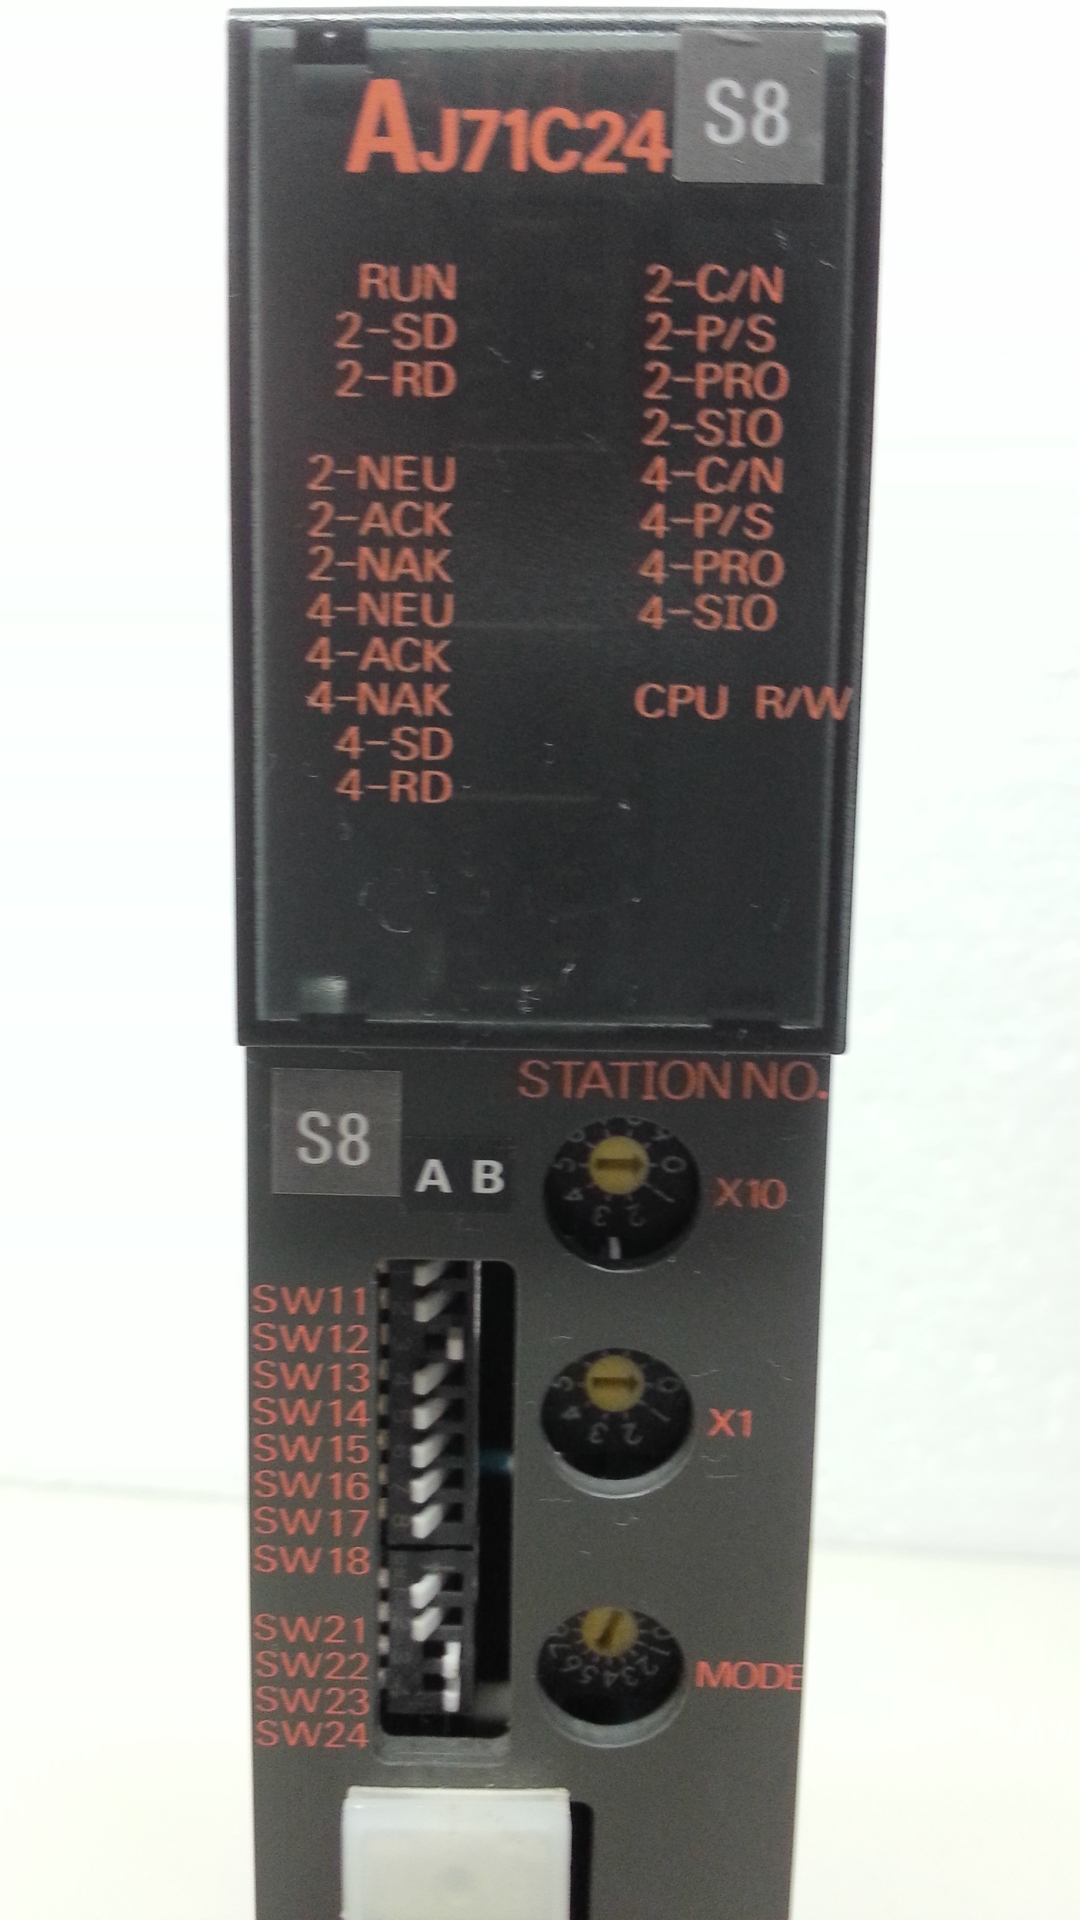 AJ71C24 S8 melsec serial communication card